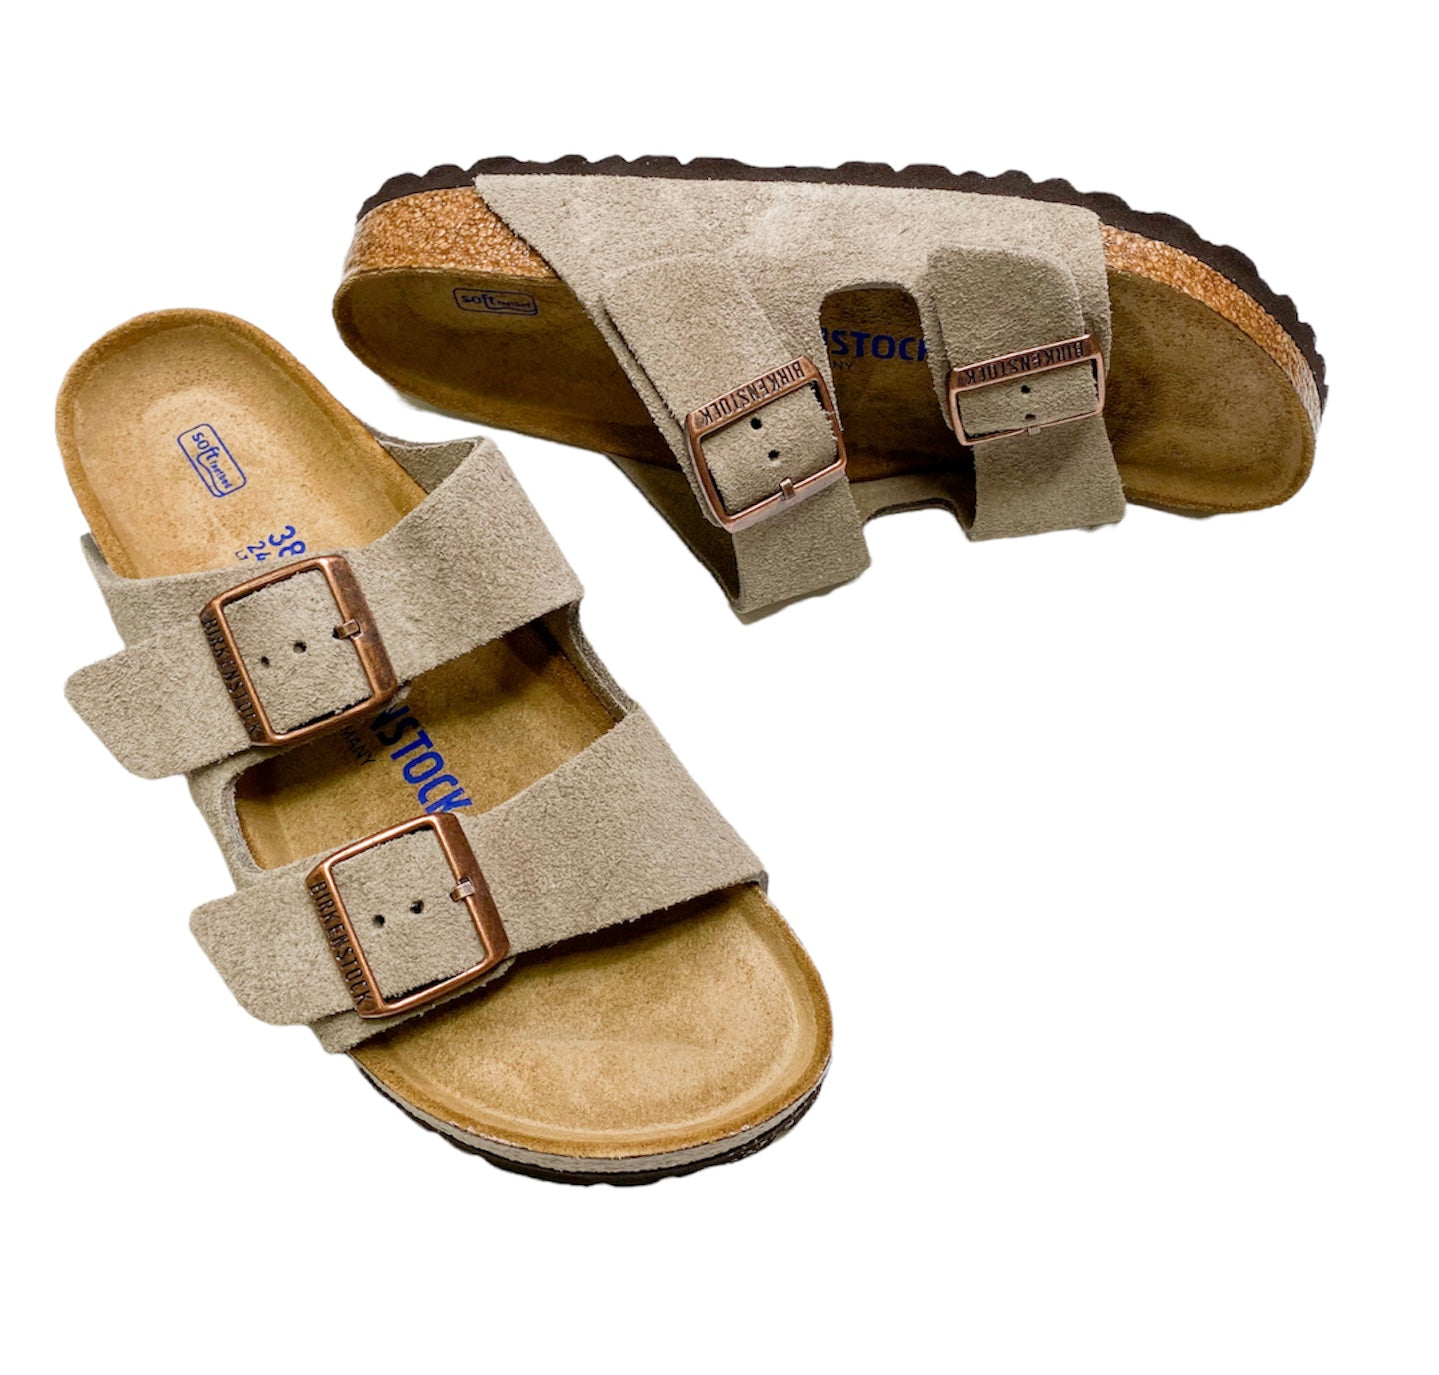 Birkenstock Arizona Soft Footbed - Taupe Suede Size 39